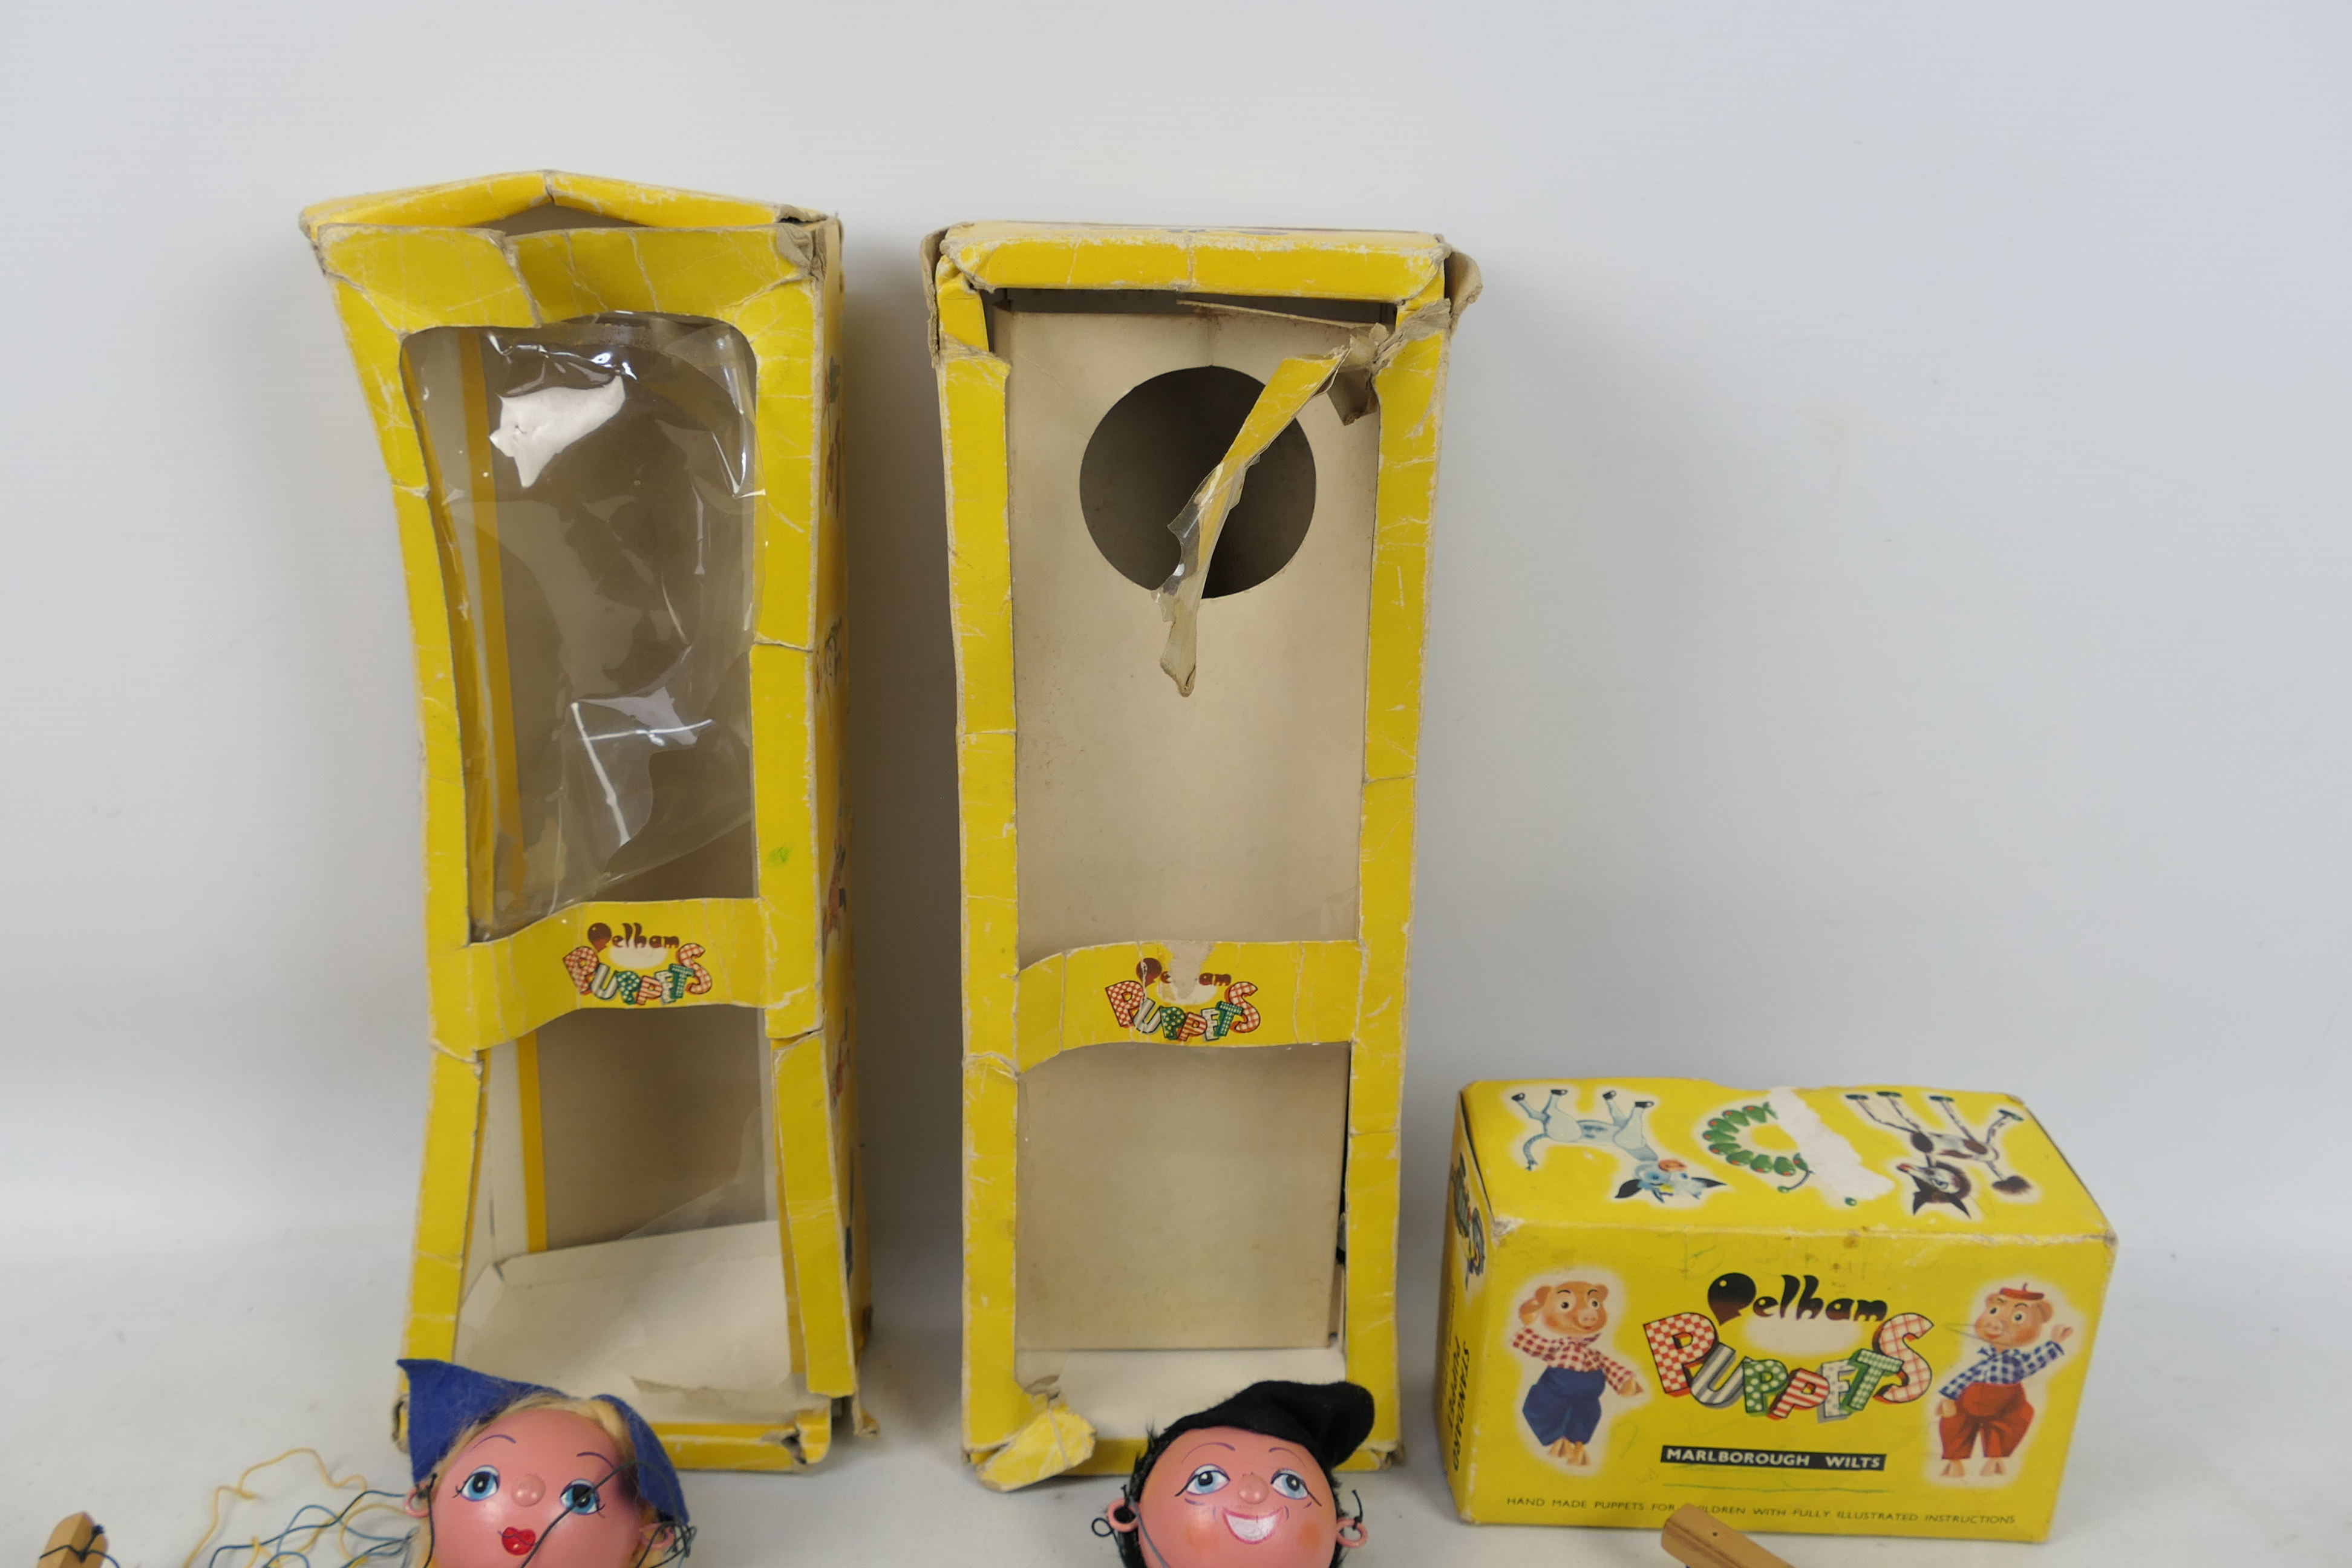 Pelham Puppets - 3 x boxed Pelham Puppets, Dutch Girl, Dutch Boy and Cat. - Image 11 of 11